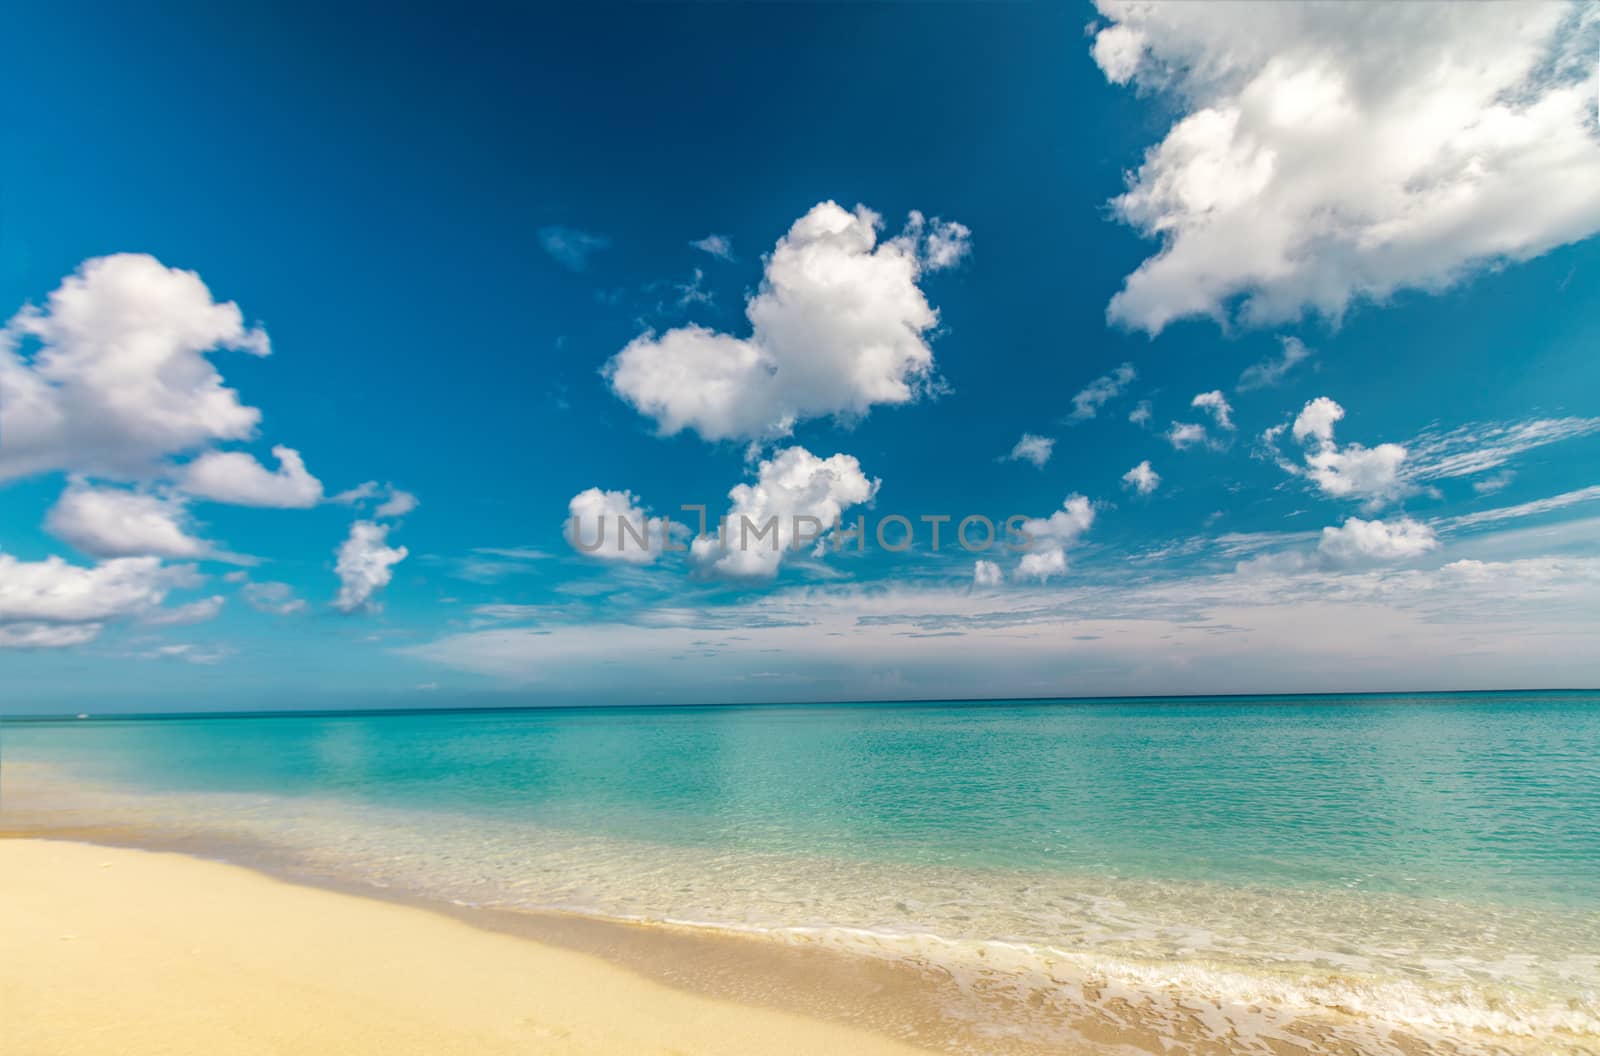 Perfect sandy beach Transparent calm tropical sea